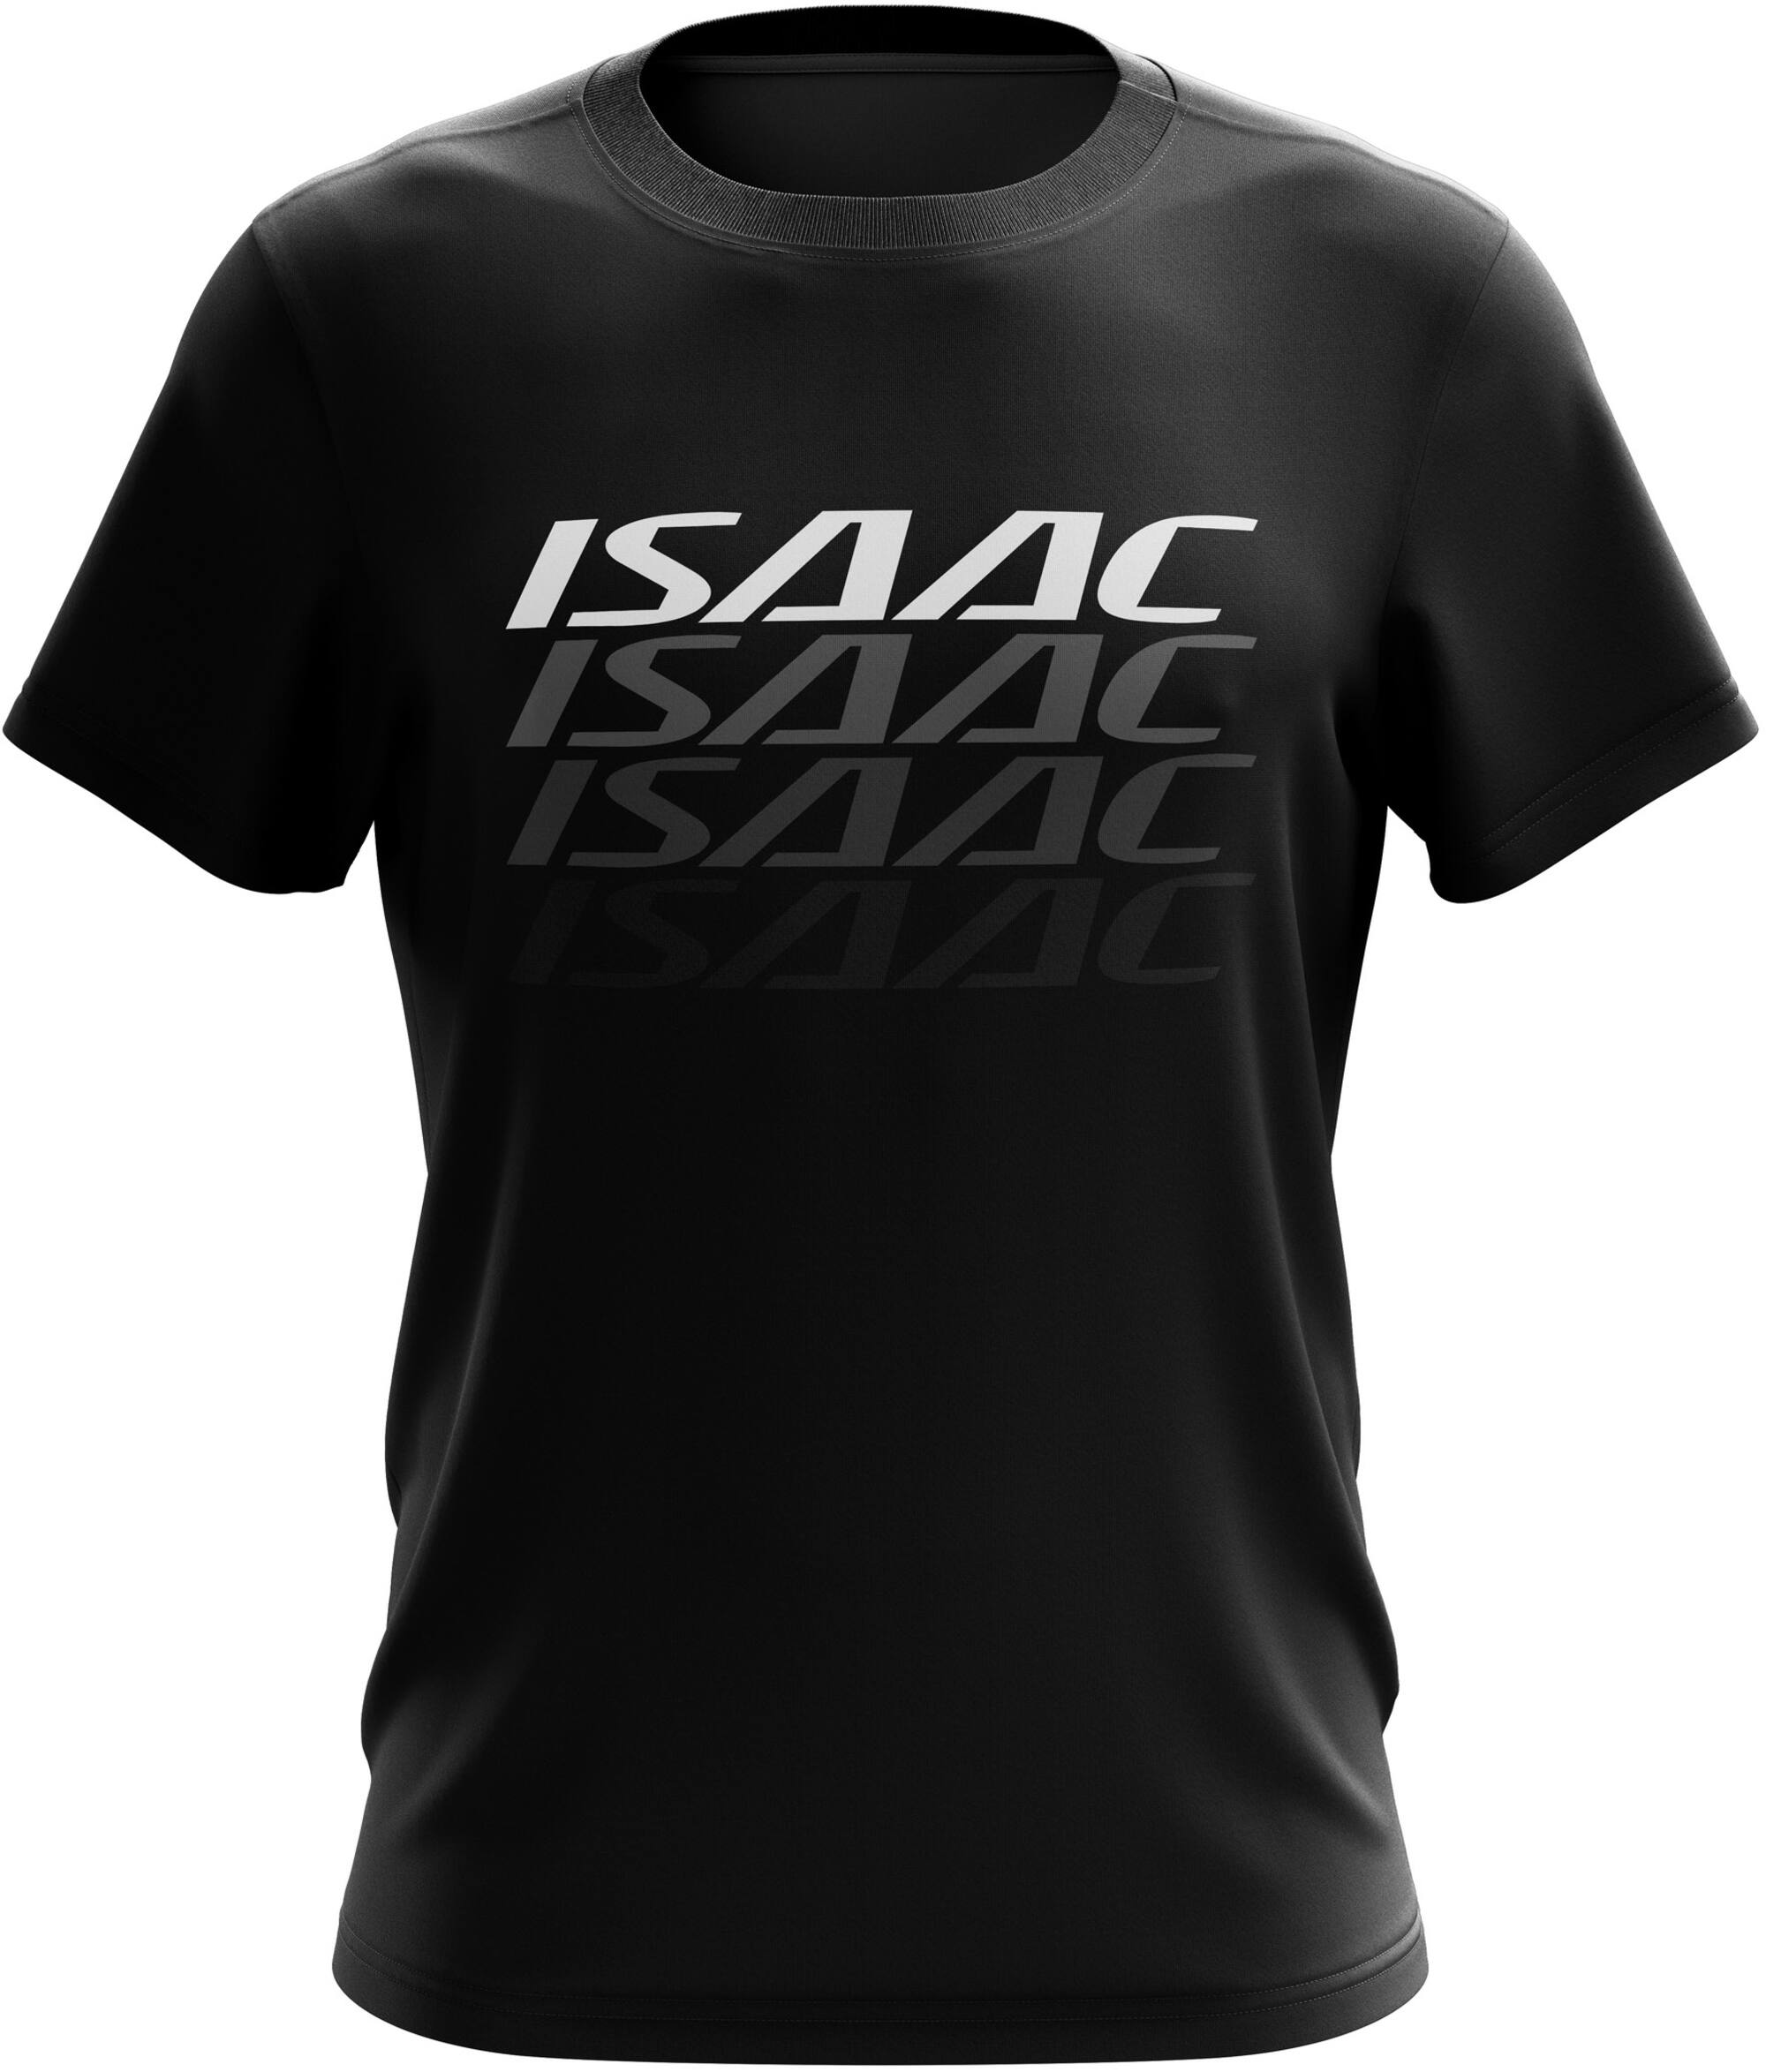 ISAAC T-SHIRT CASUAL MAAT XL